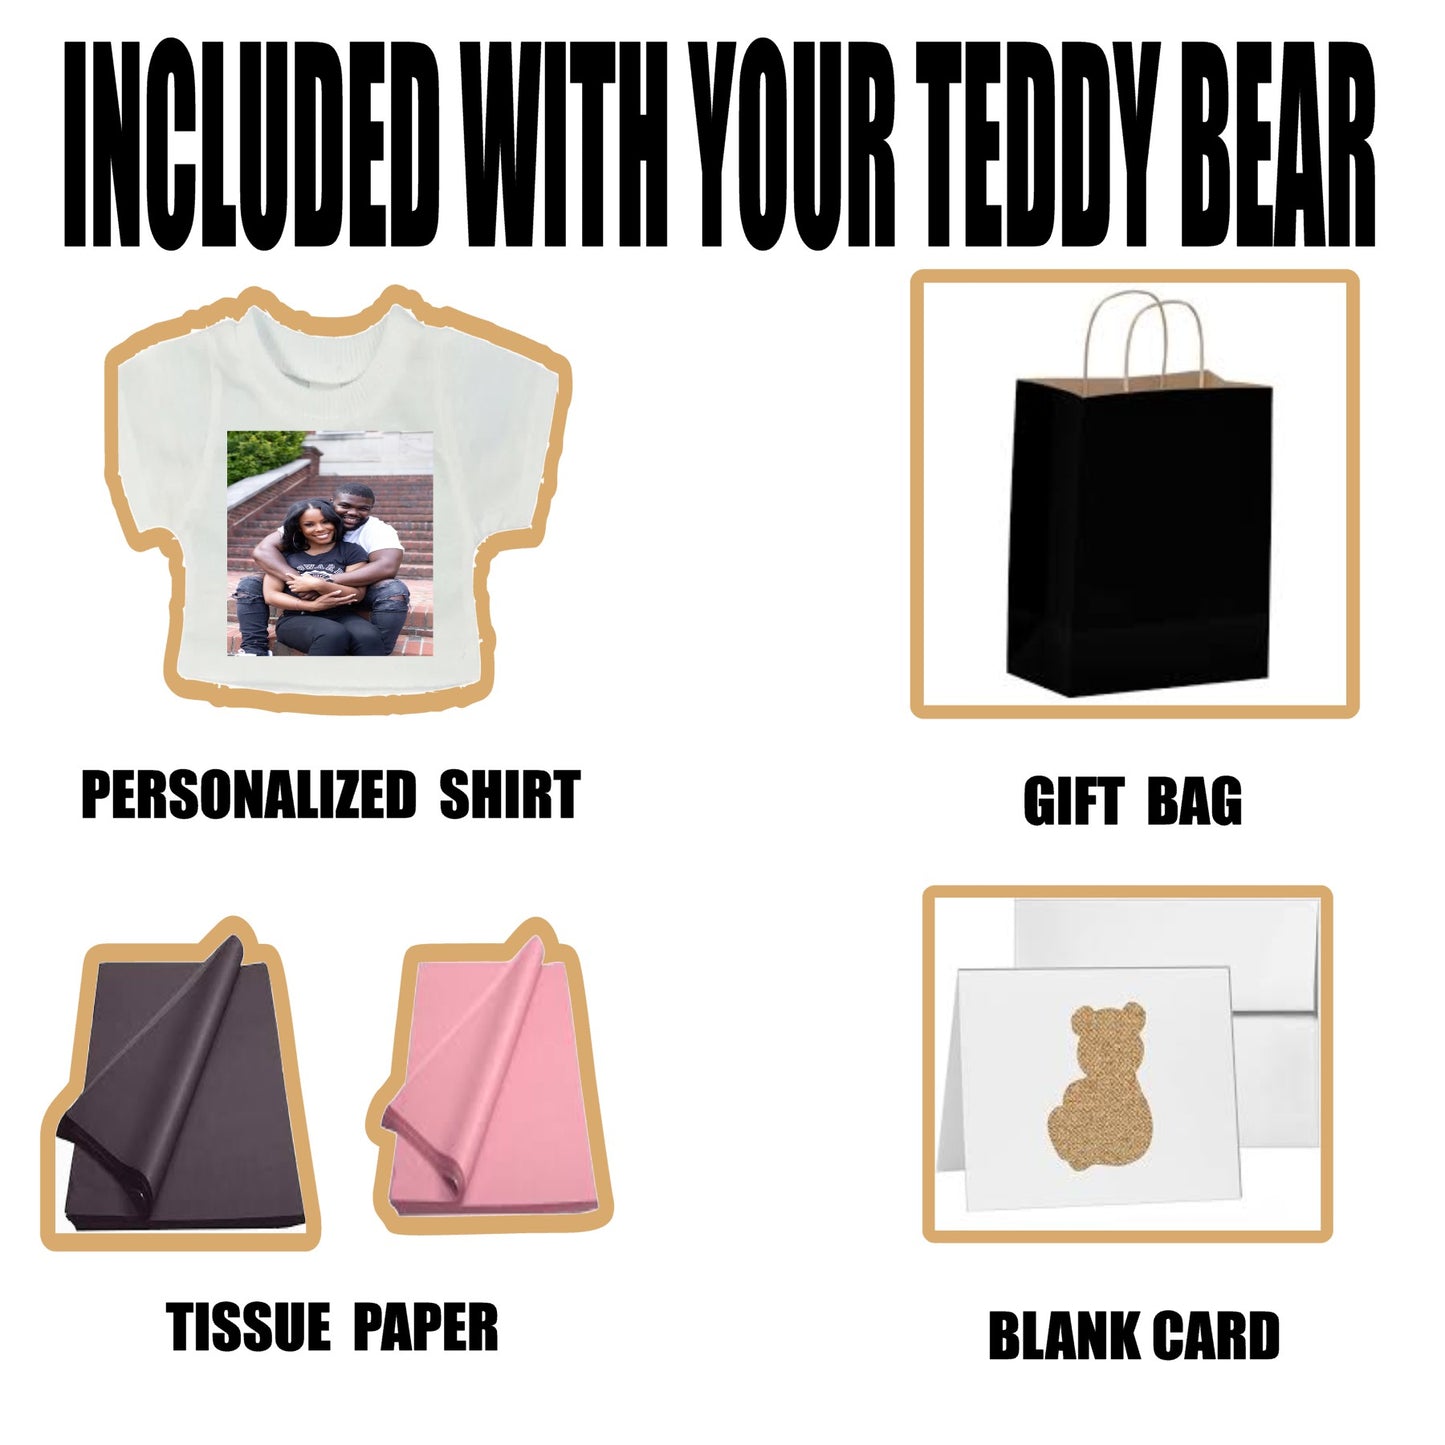 Teddy Bear with Personalized Tshirt